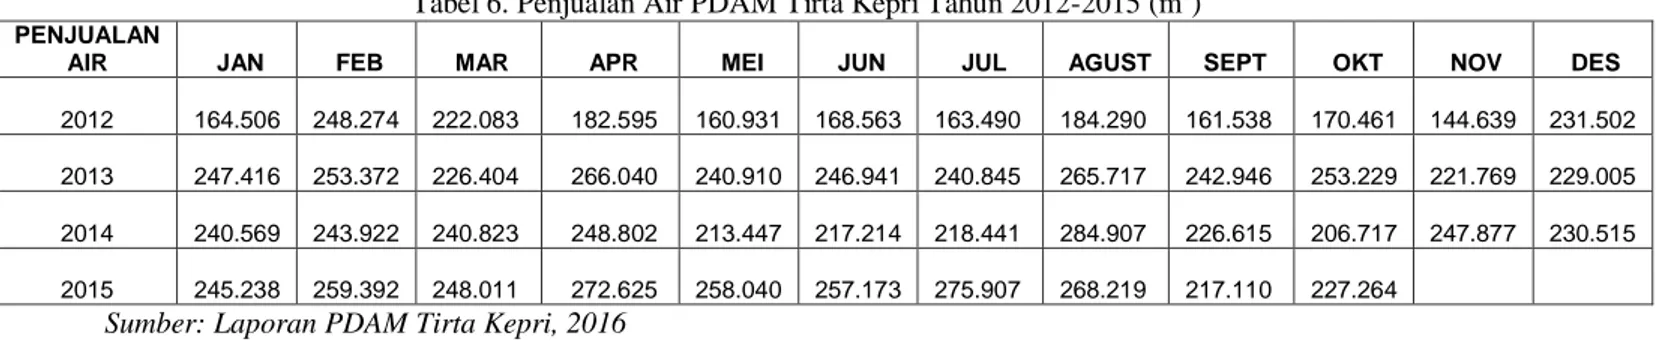 Tabel 6. Penjualan Air PDAM Tirta Kepri Tahun 2012-2015 (m 3 ) 